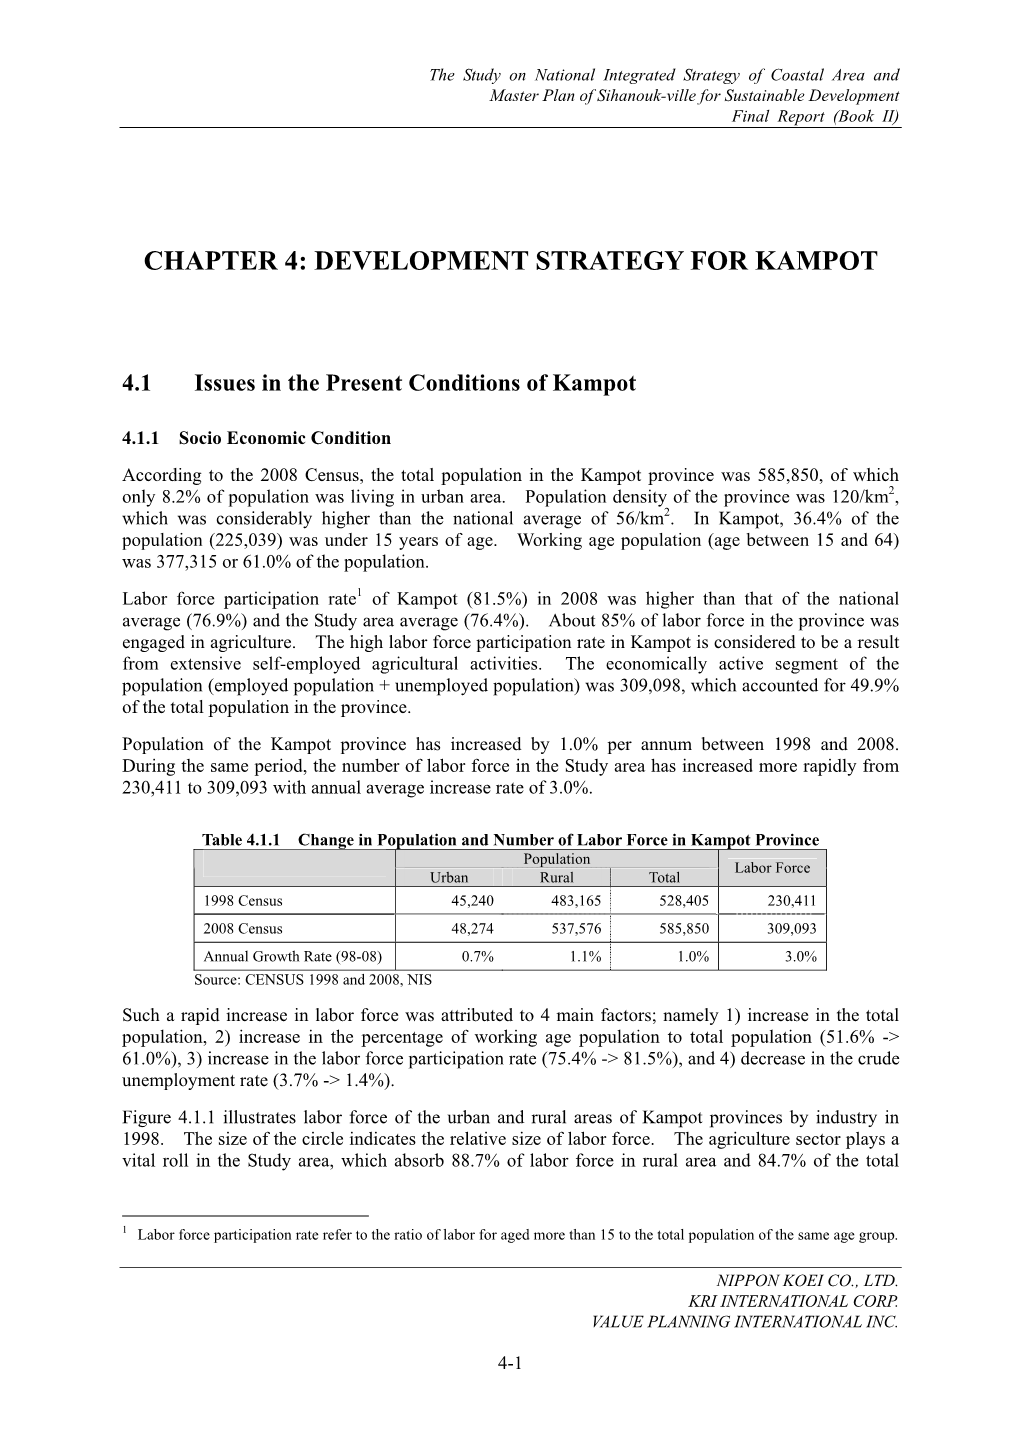 Chapter 4: Development Strategy for Kampot